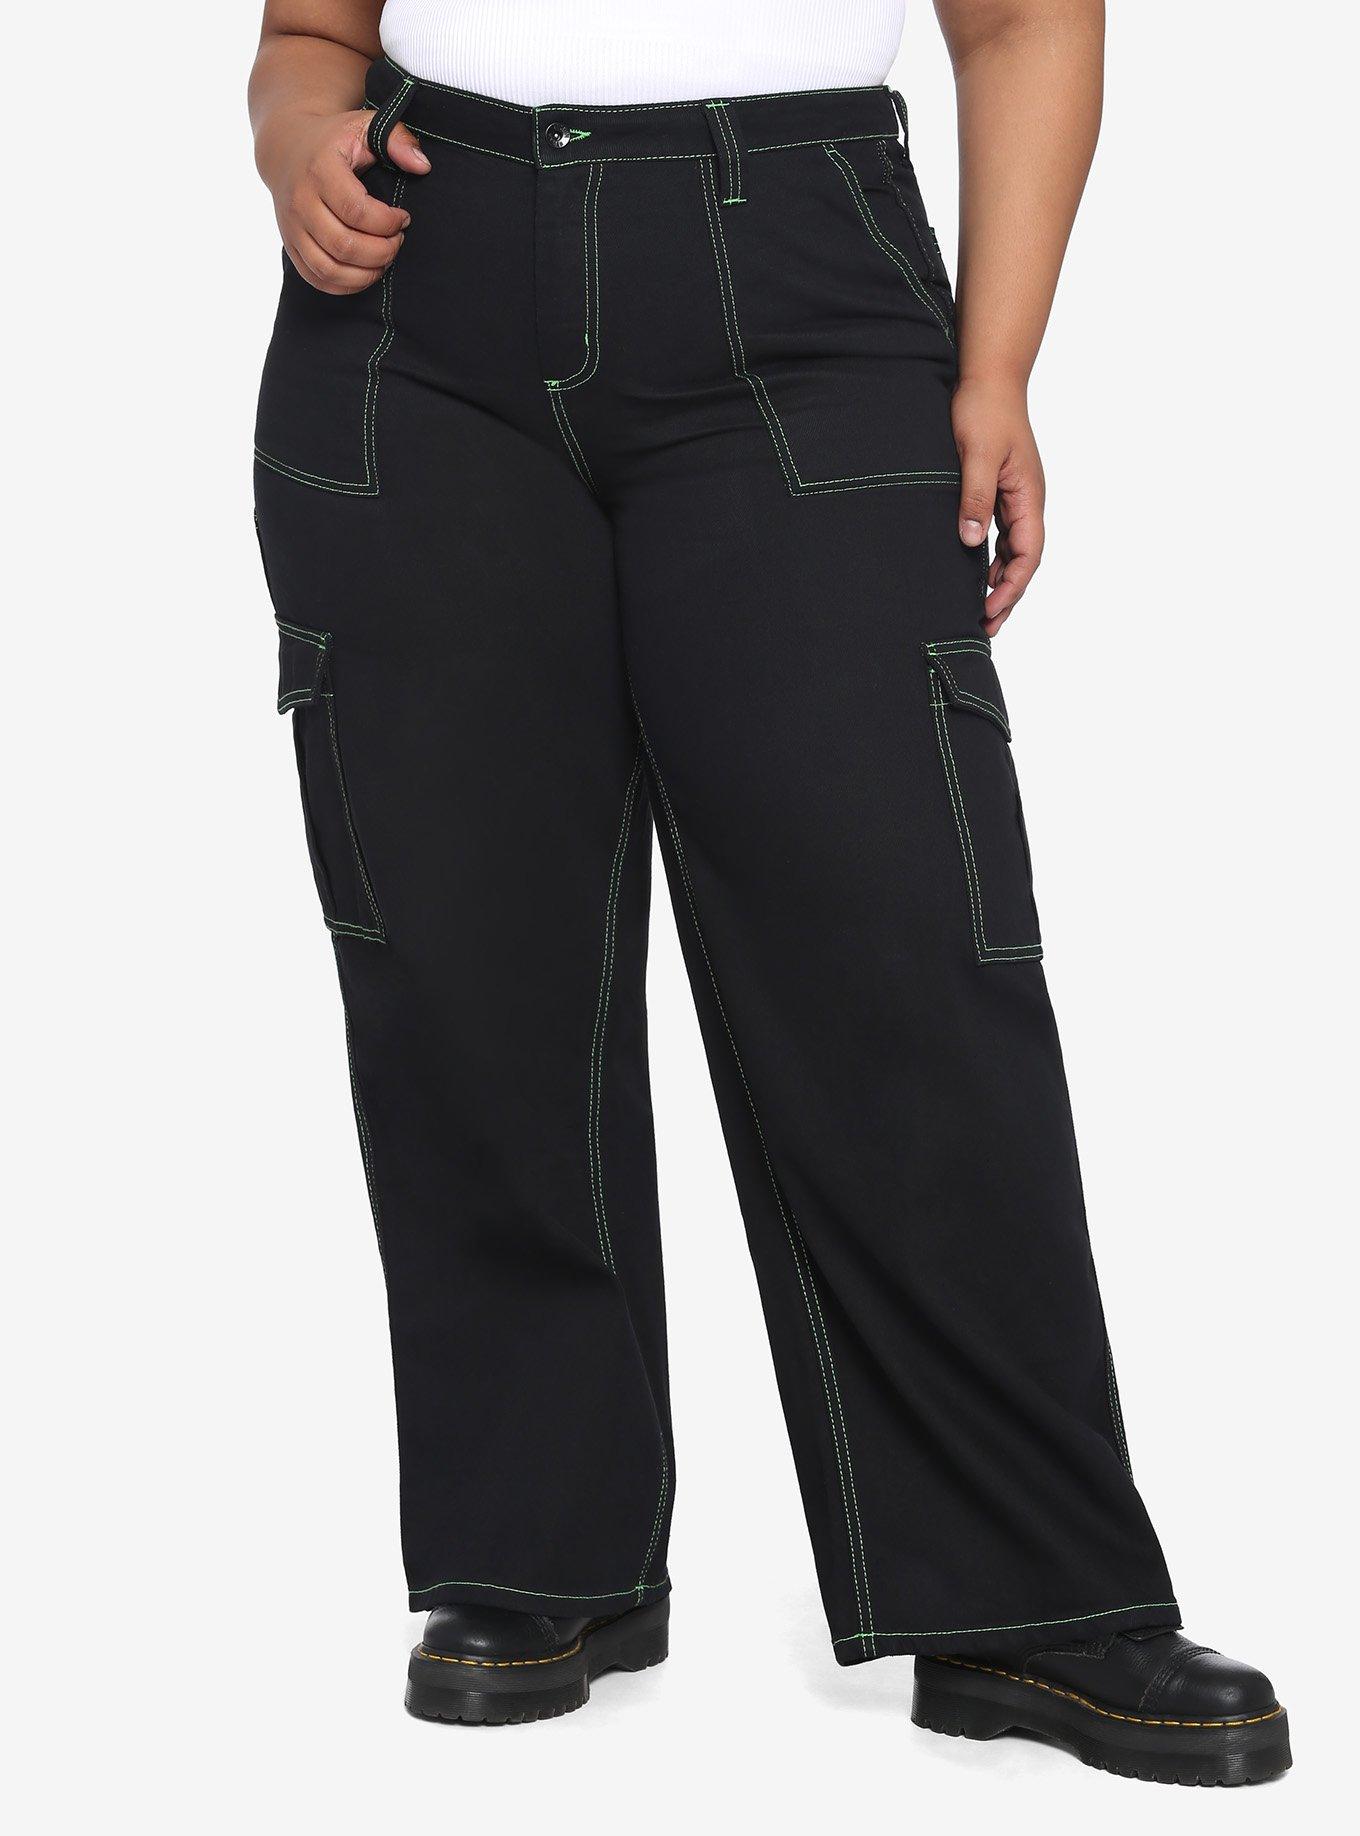 HT Denim Black & Green Stitch Hi-Rise Carpenter Pants Plus Size